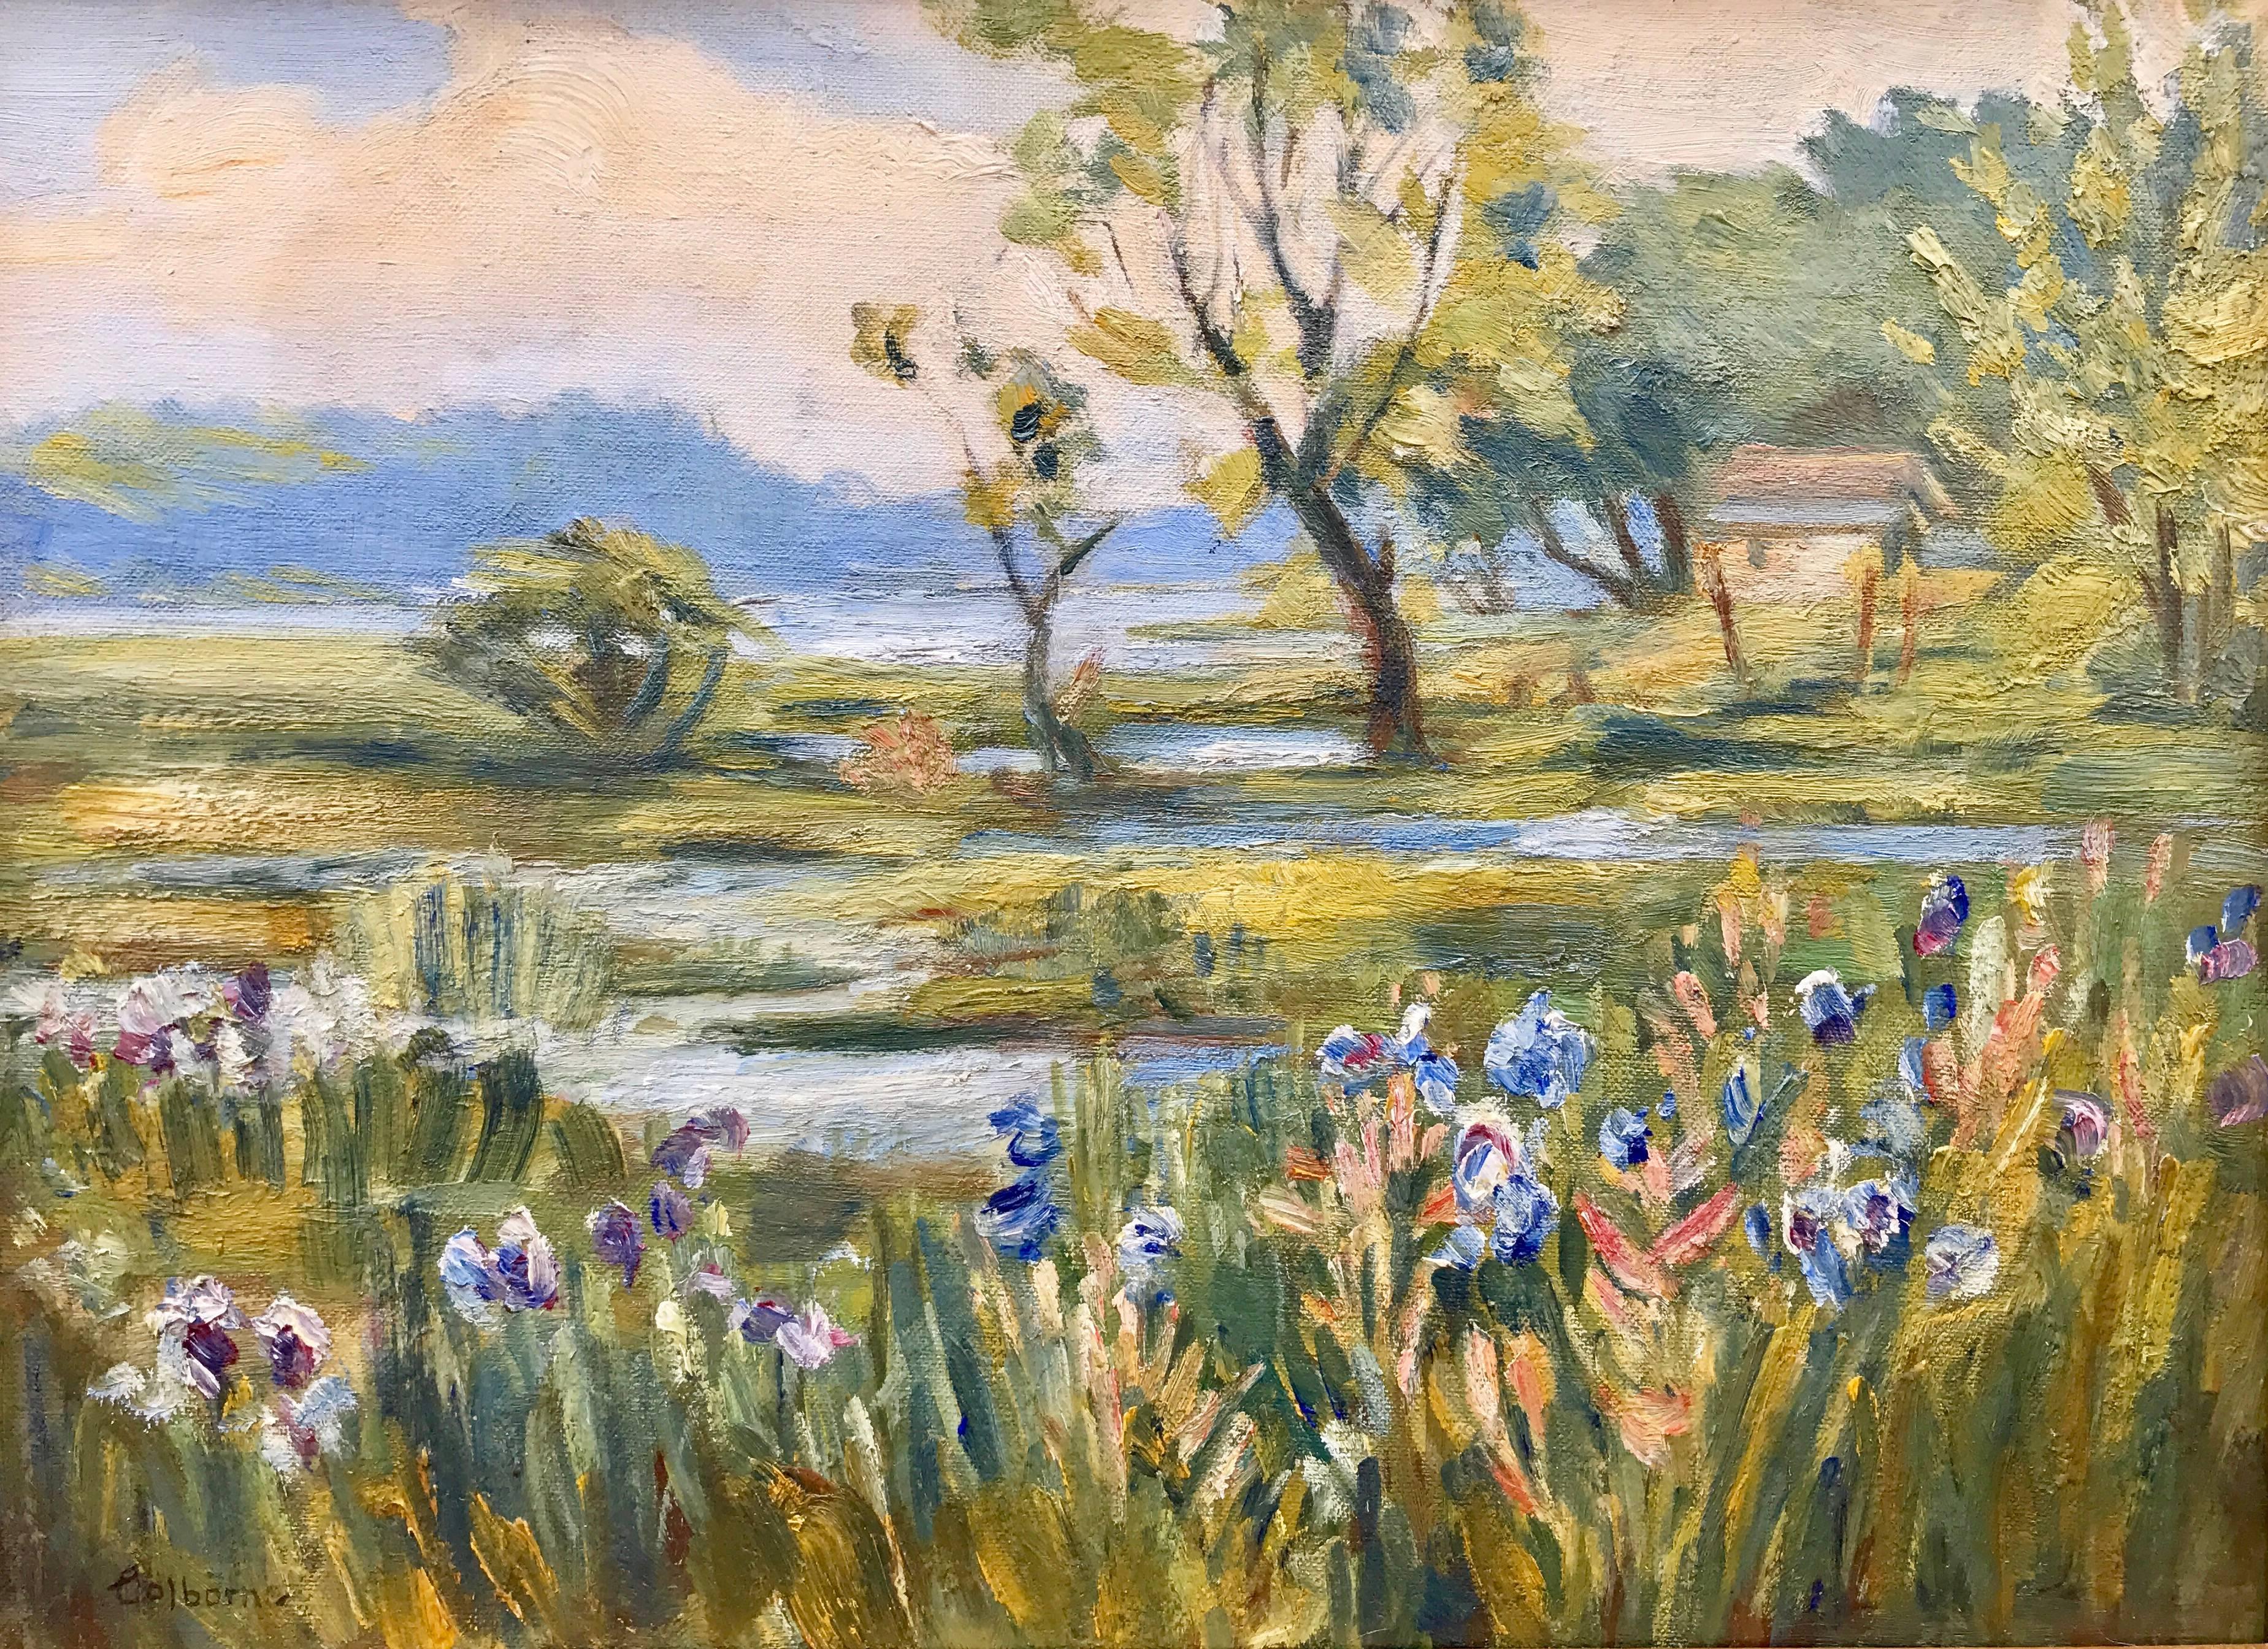 Belle Evelyn Colborne Hamilton Landscape Painting - "Irises"